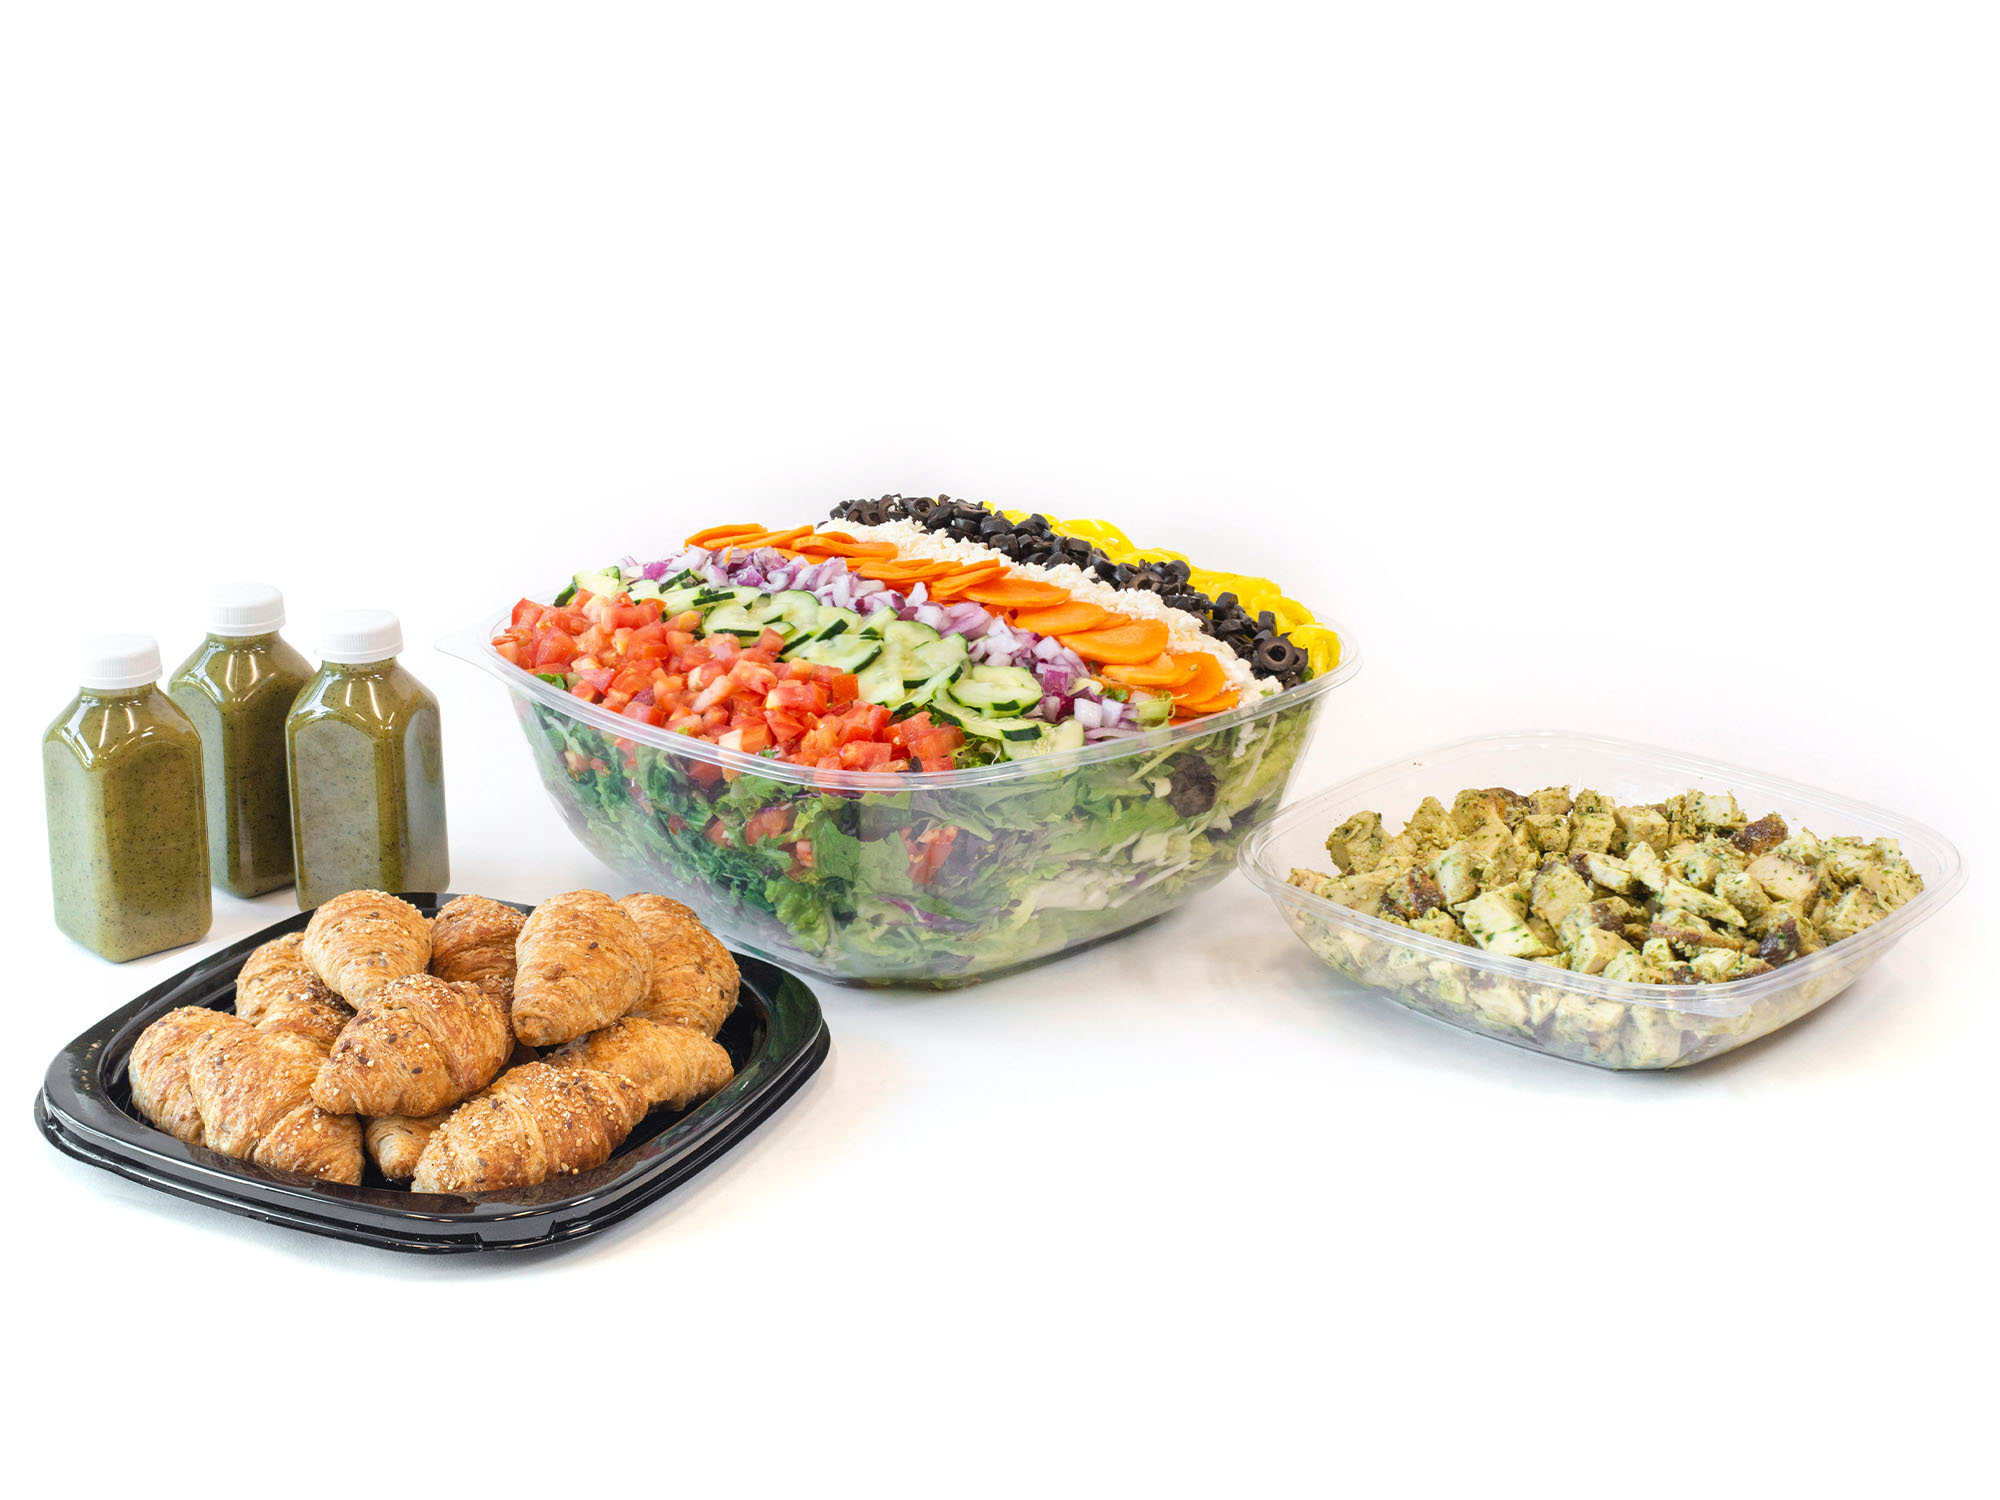 Configure Salad Box Lunch - Salata